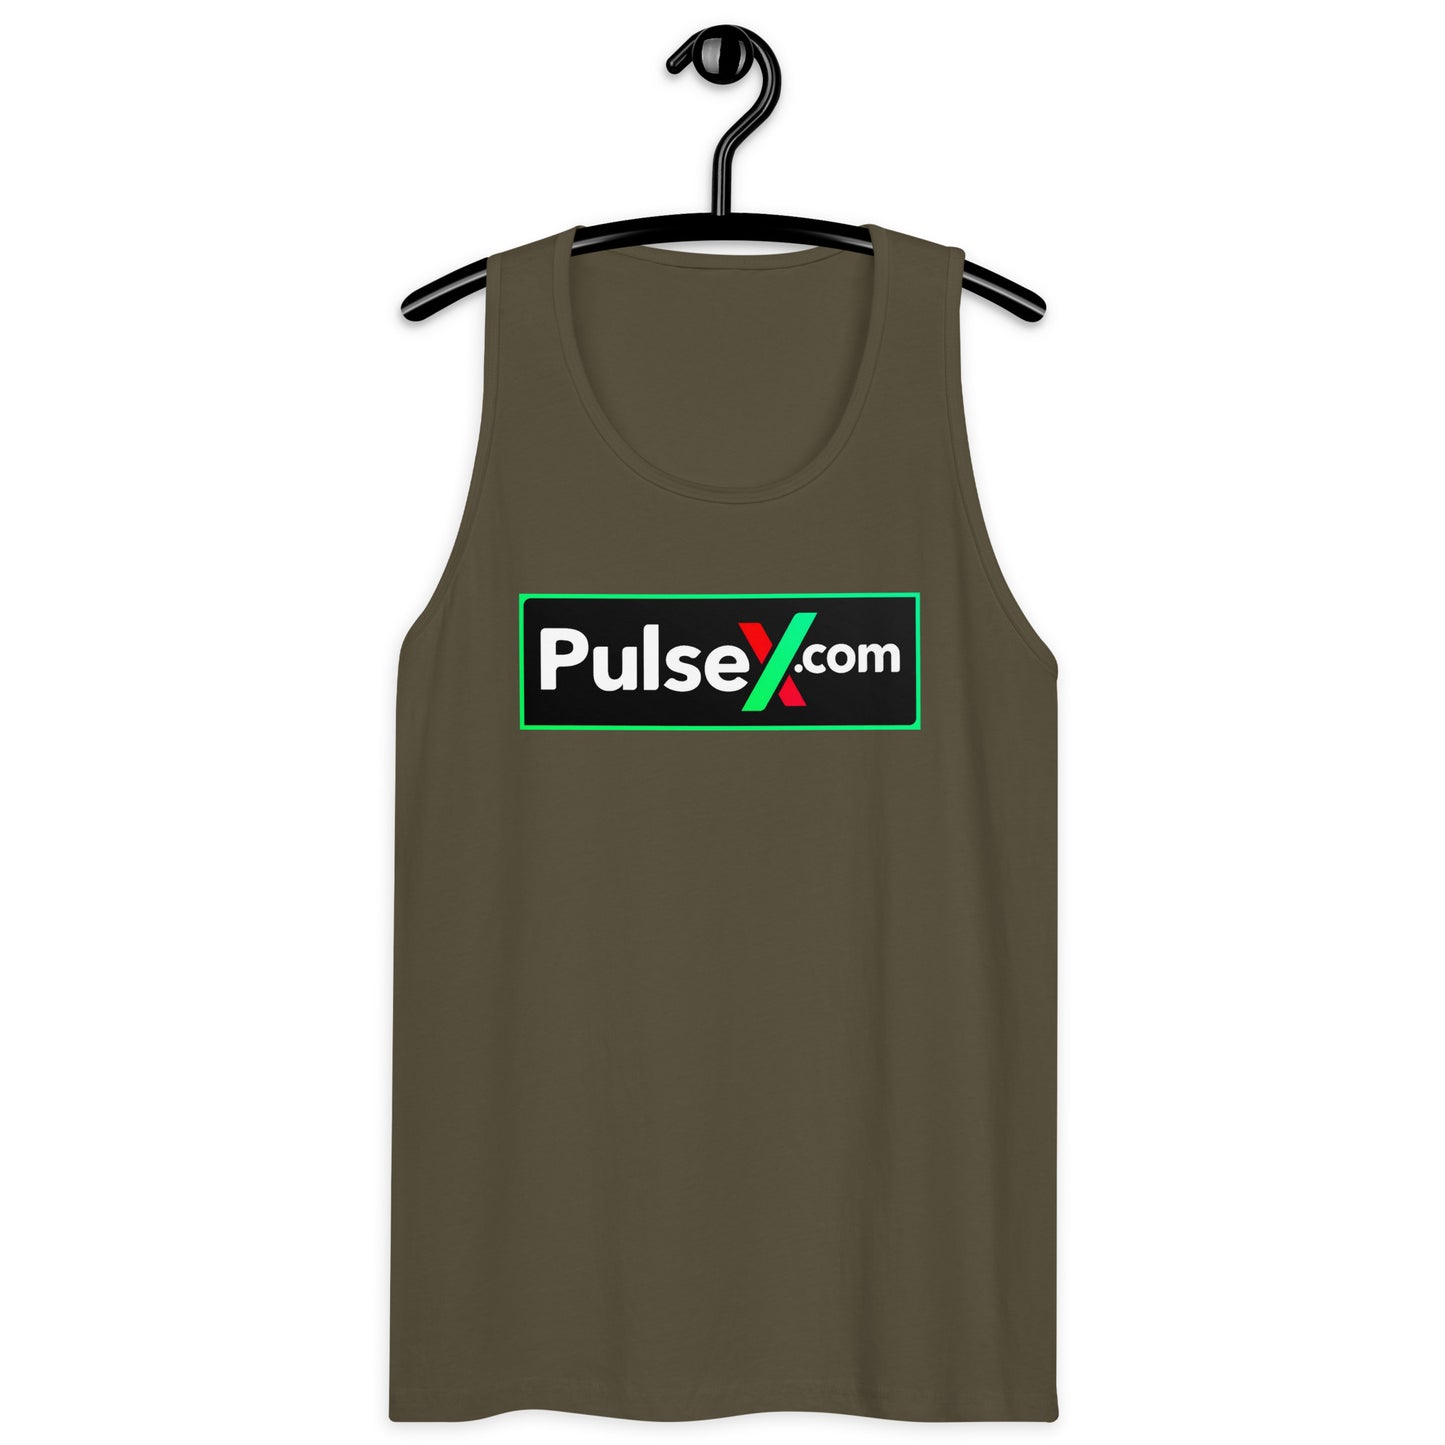 PulseX.com Men’s Premium Tank Top